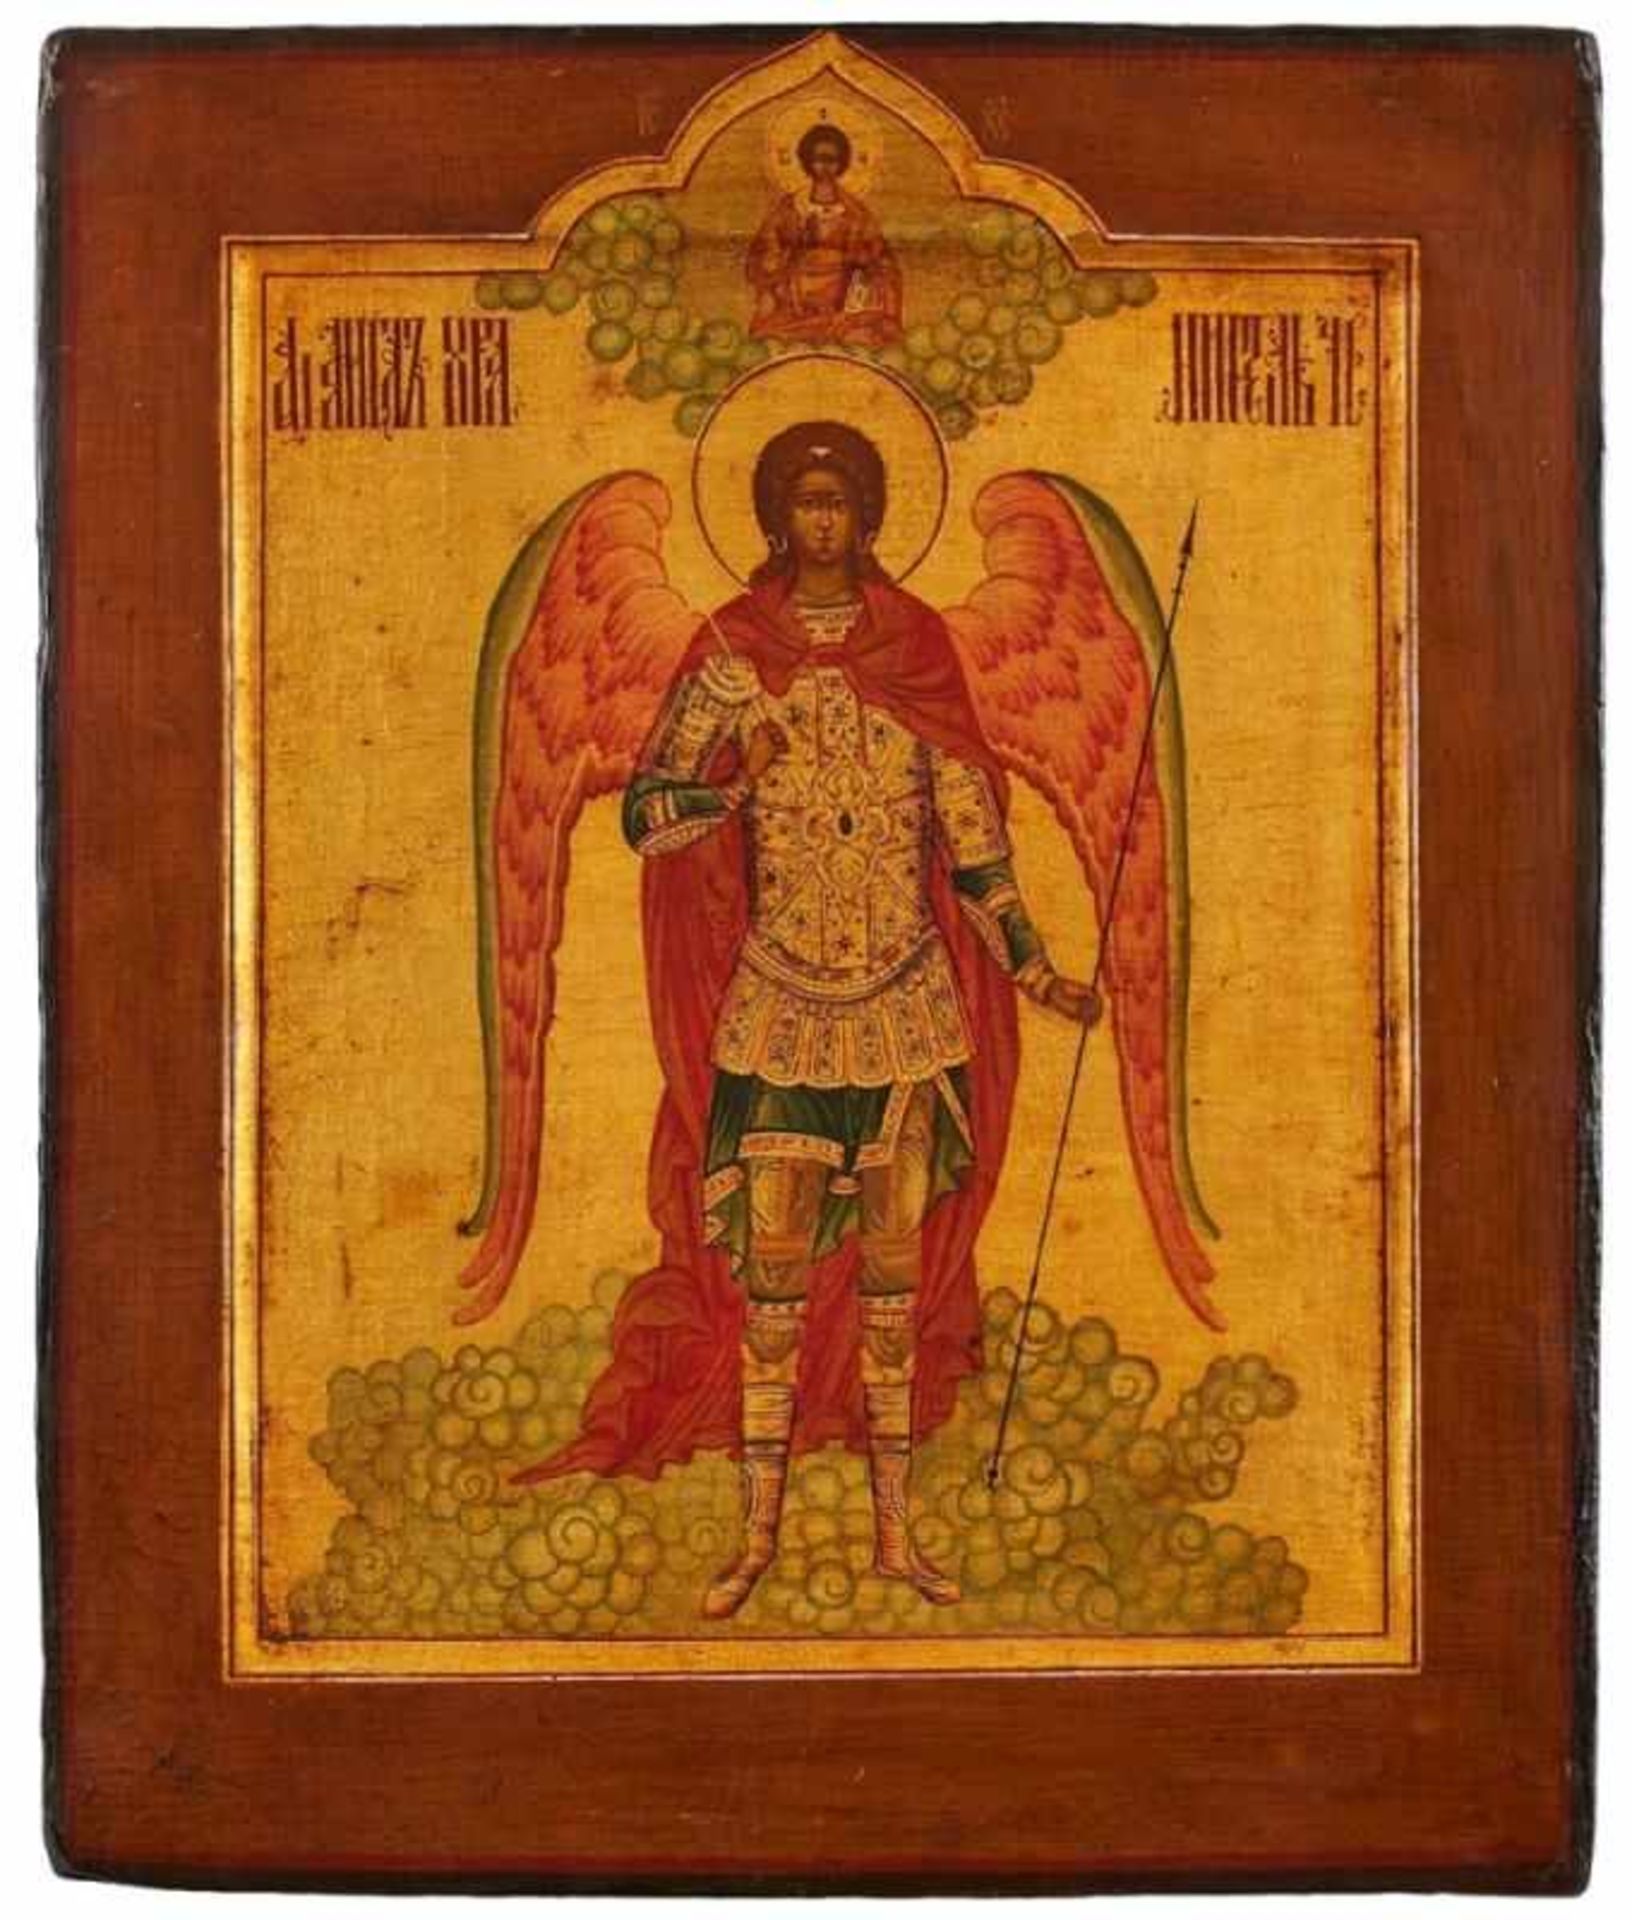 Ikone Russland 18. Jh."Heiliger Schutzengel" 31,5 x 26,5 cm Provenienz: Ikonengraphisches Institut